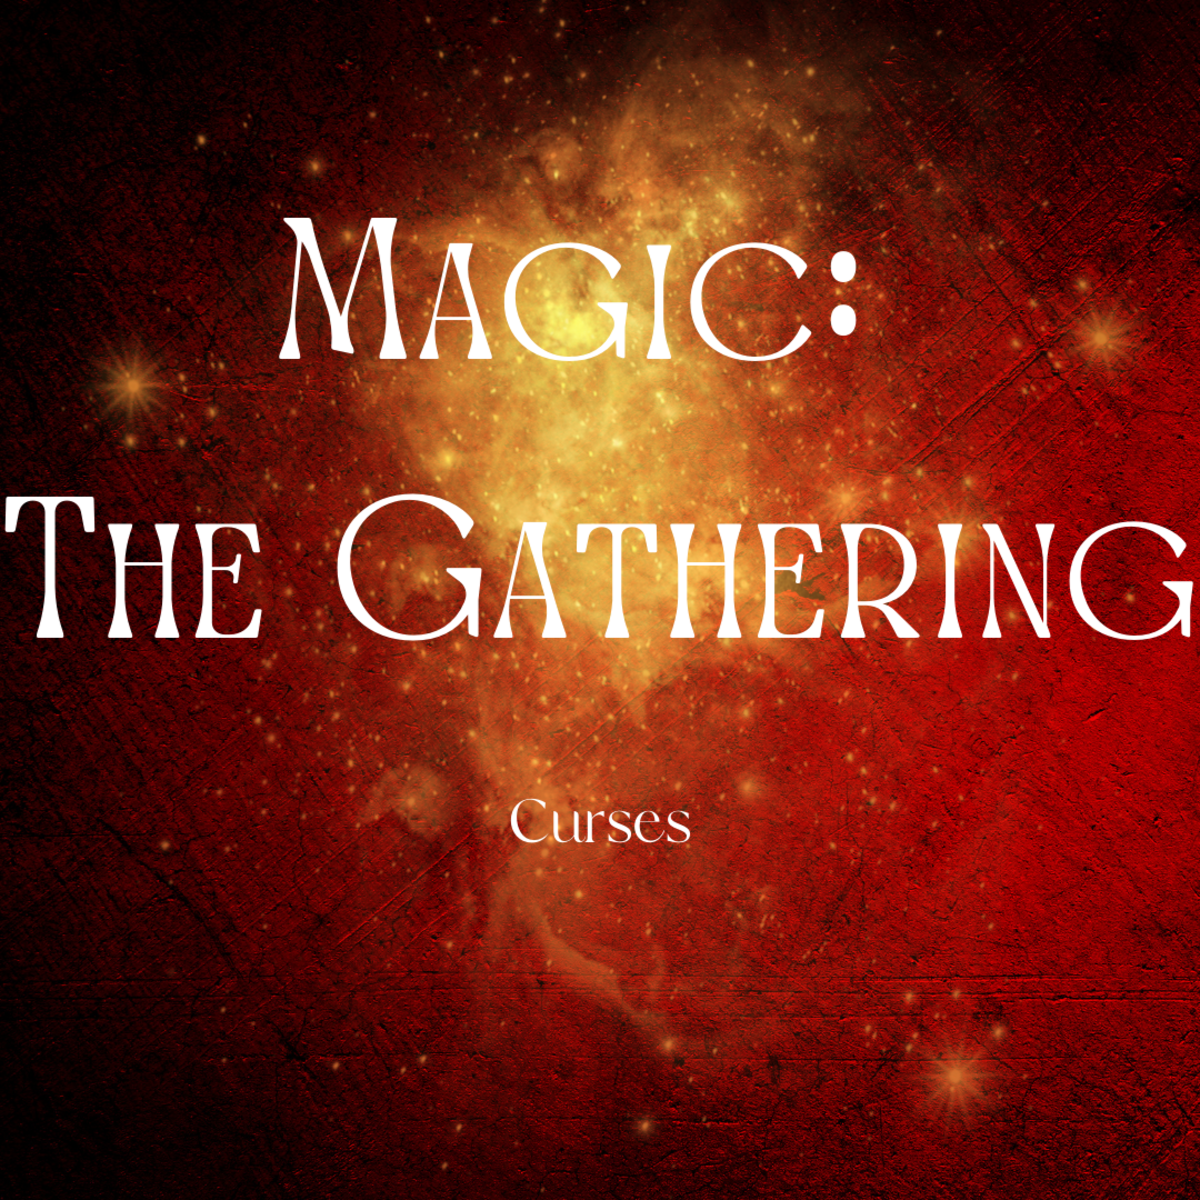 Top 10 Curses in Magic: The Gathering - HobbyLark